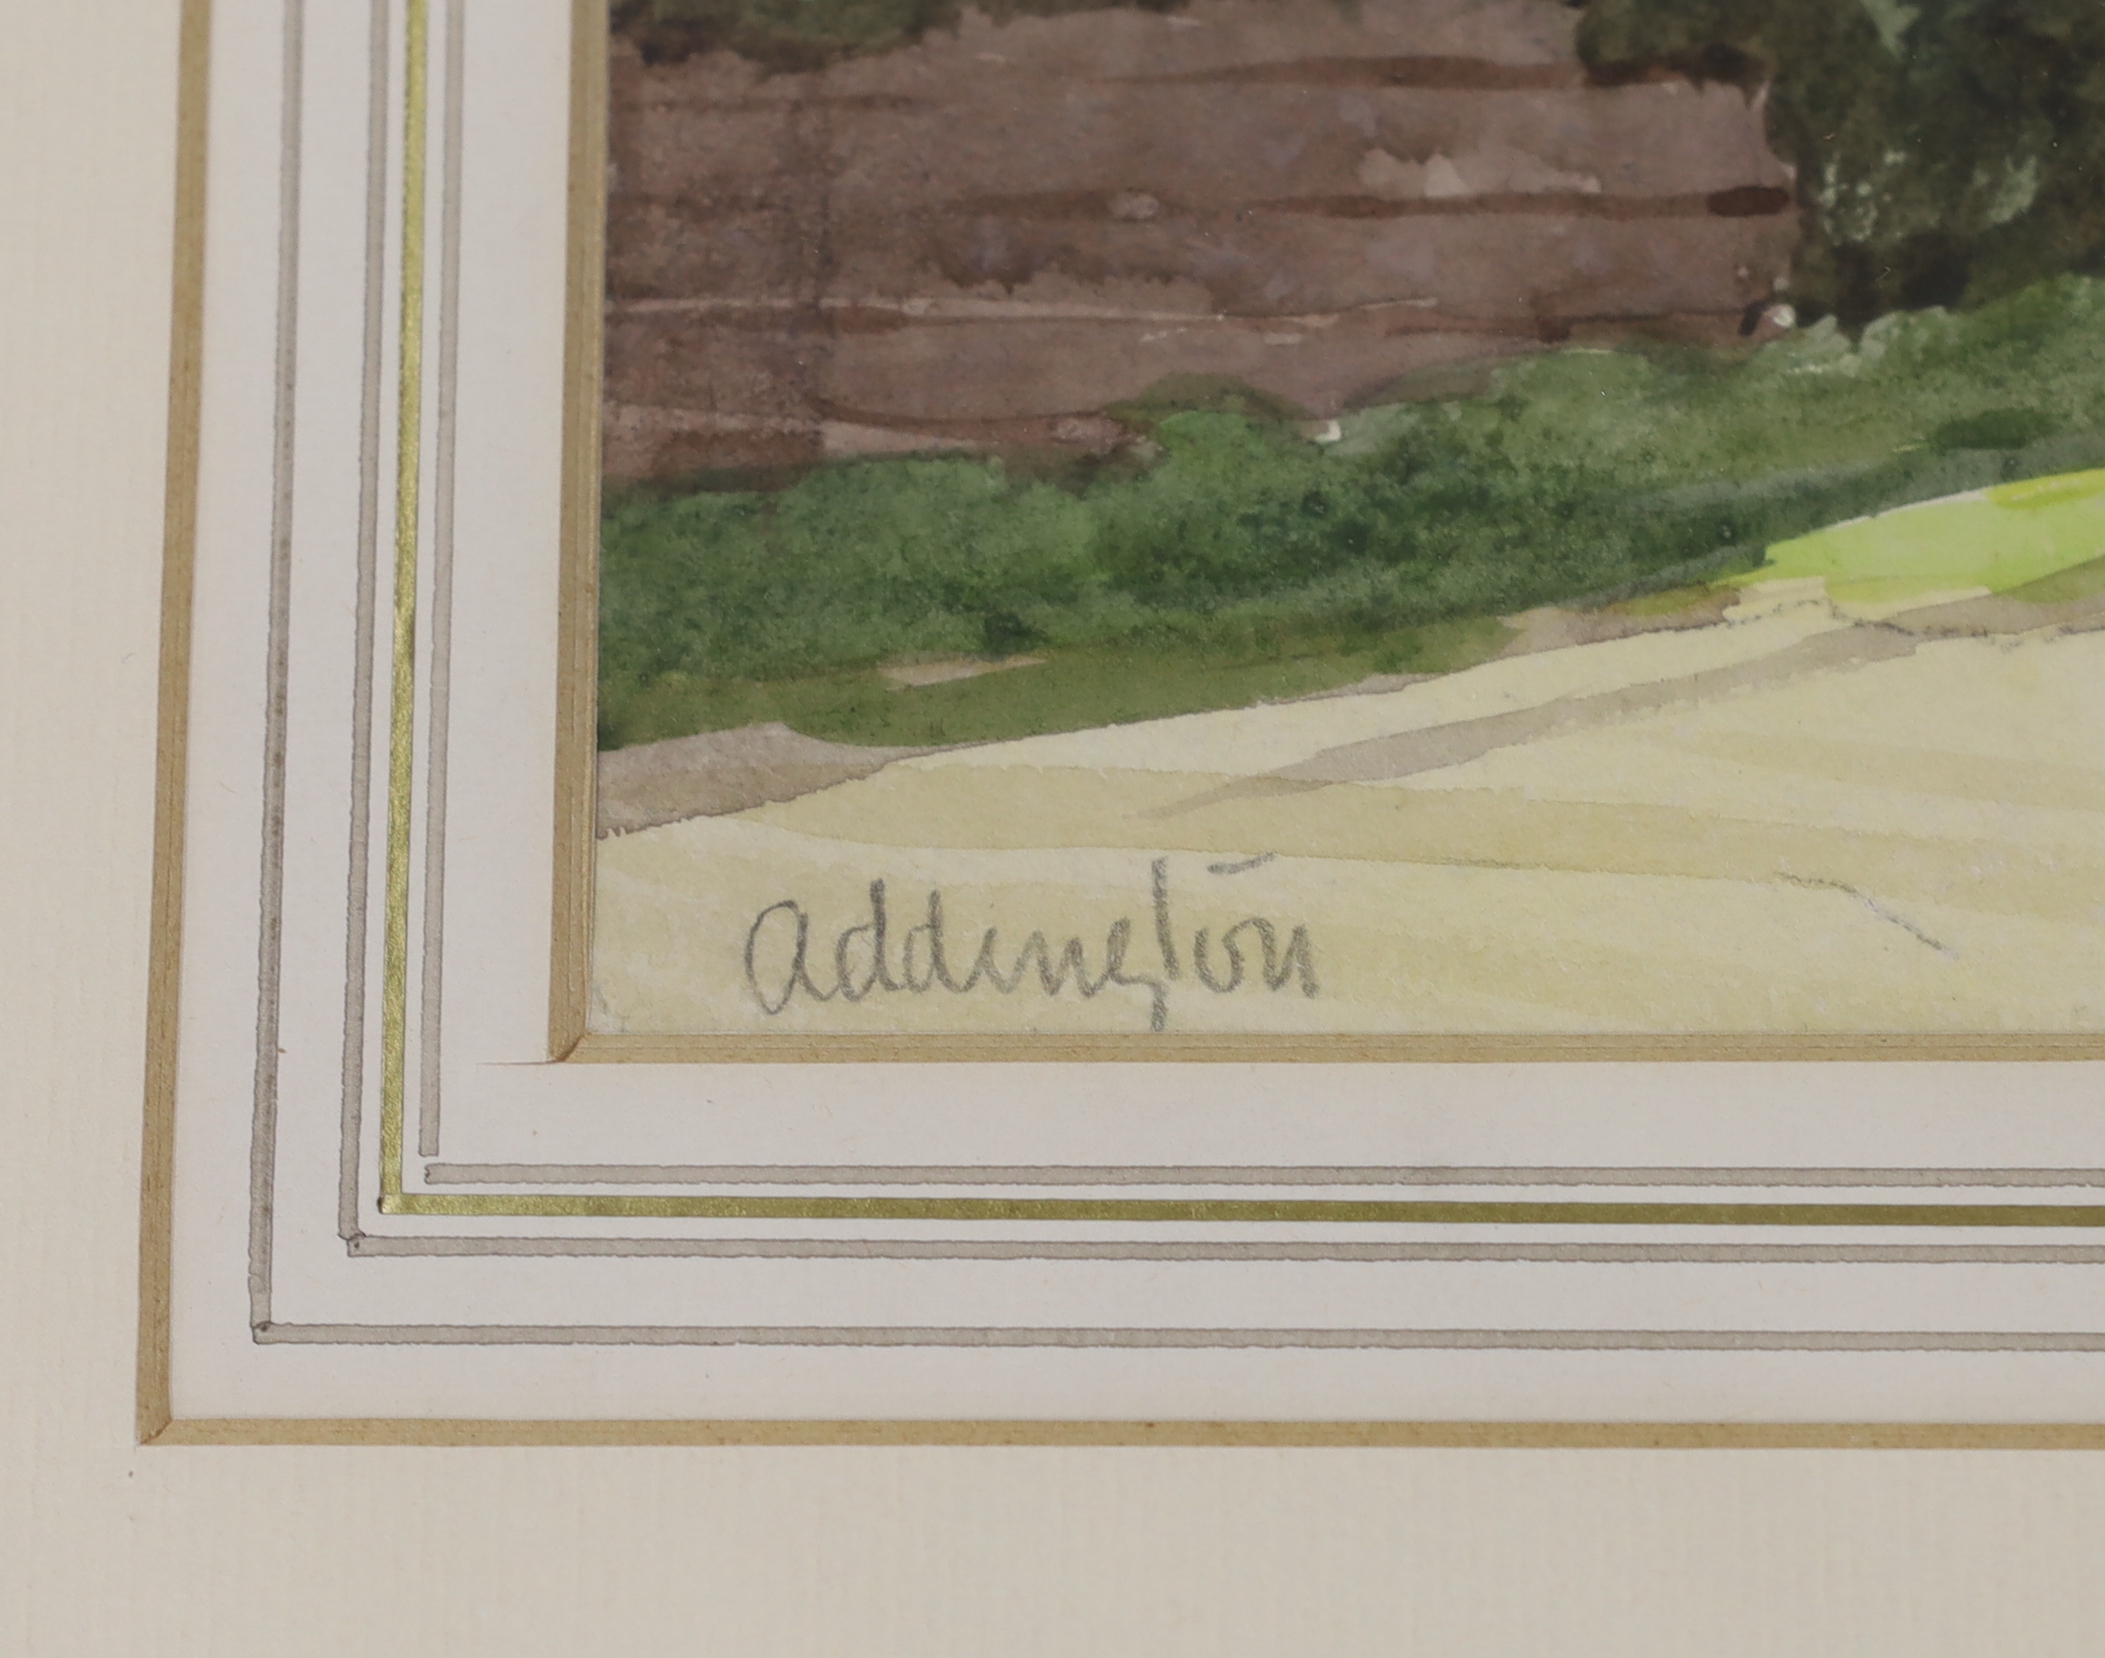 William Tatton Winter RBA (1855-1928), watercolour, 'Lodge gates at Addington, Surrey', signed with monogram, 24 x 34cm, Provenance details verso: Glenolva Tatton Winter, the artist's daughter-in-law, March 1981